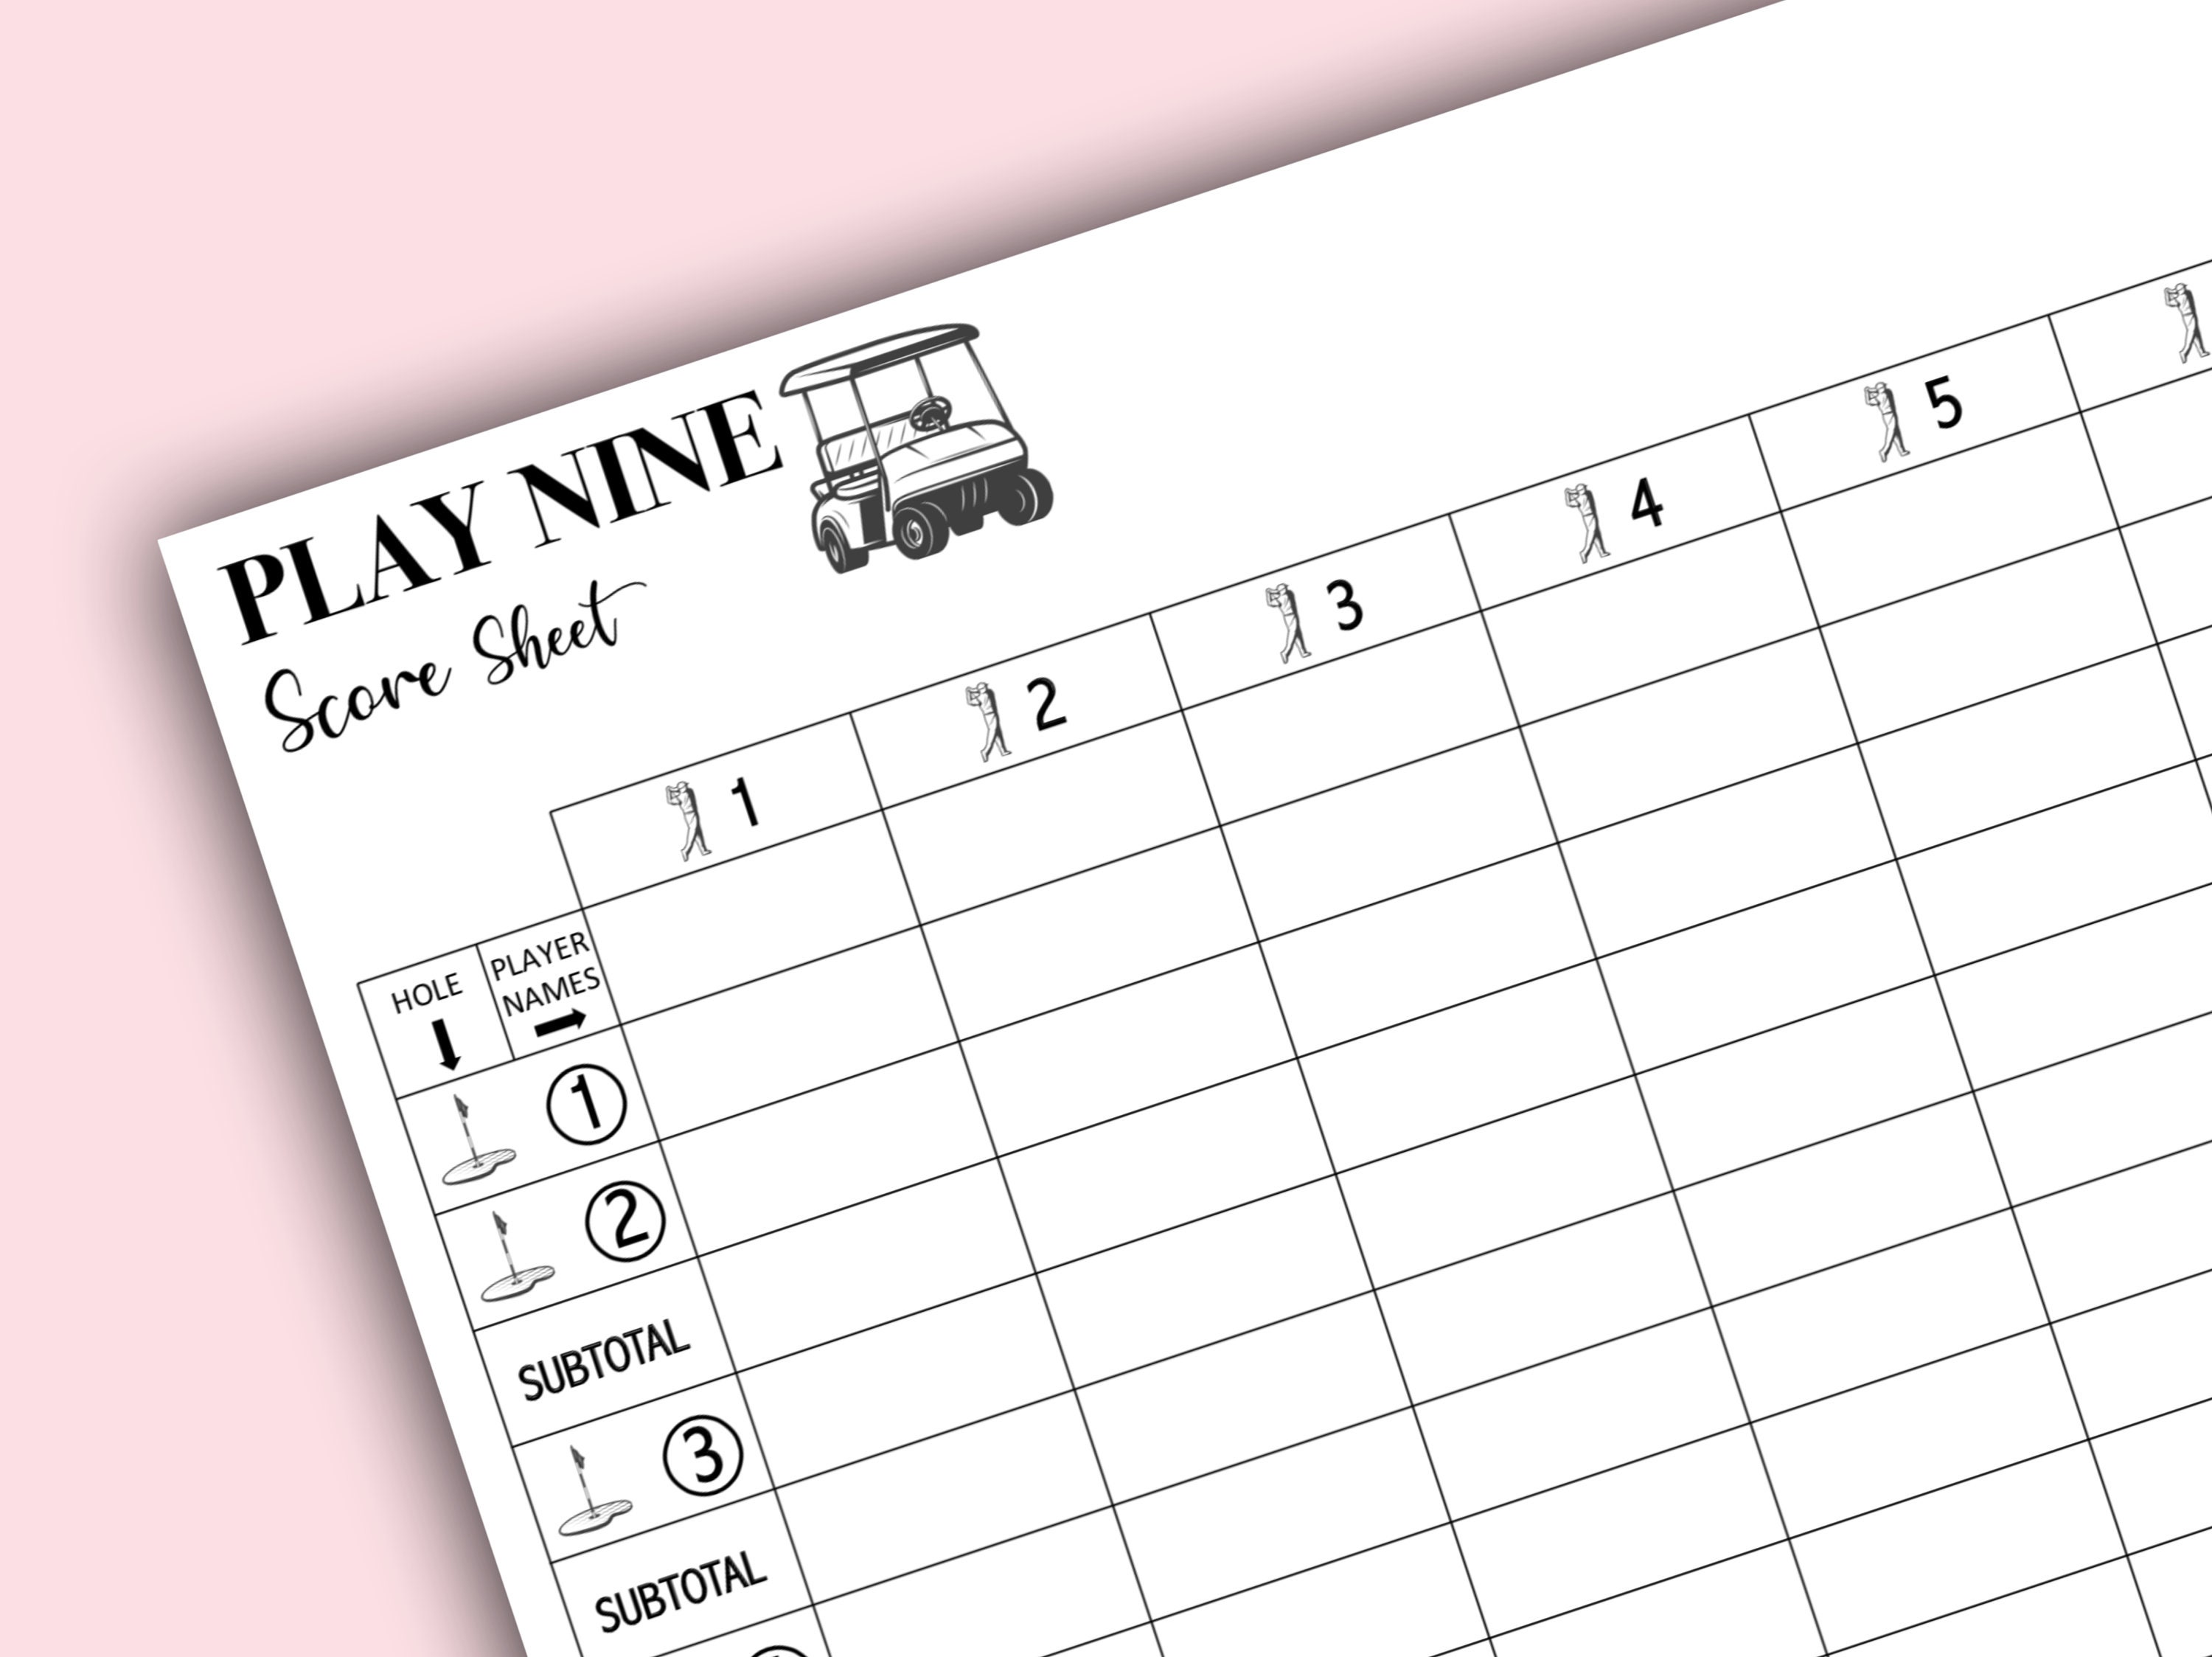 Play Nine Score Sheets Play Nine Score Cards Printable Play Nine Score Pads  Printable File PDF Download 8.5x11 